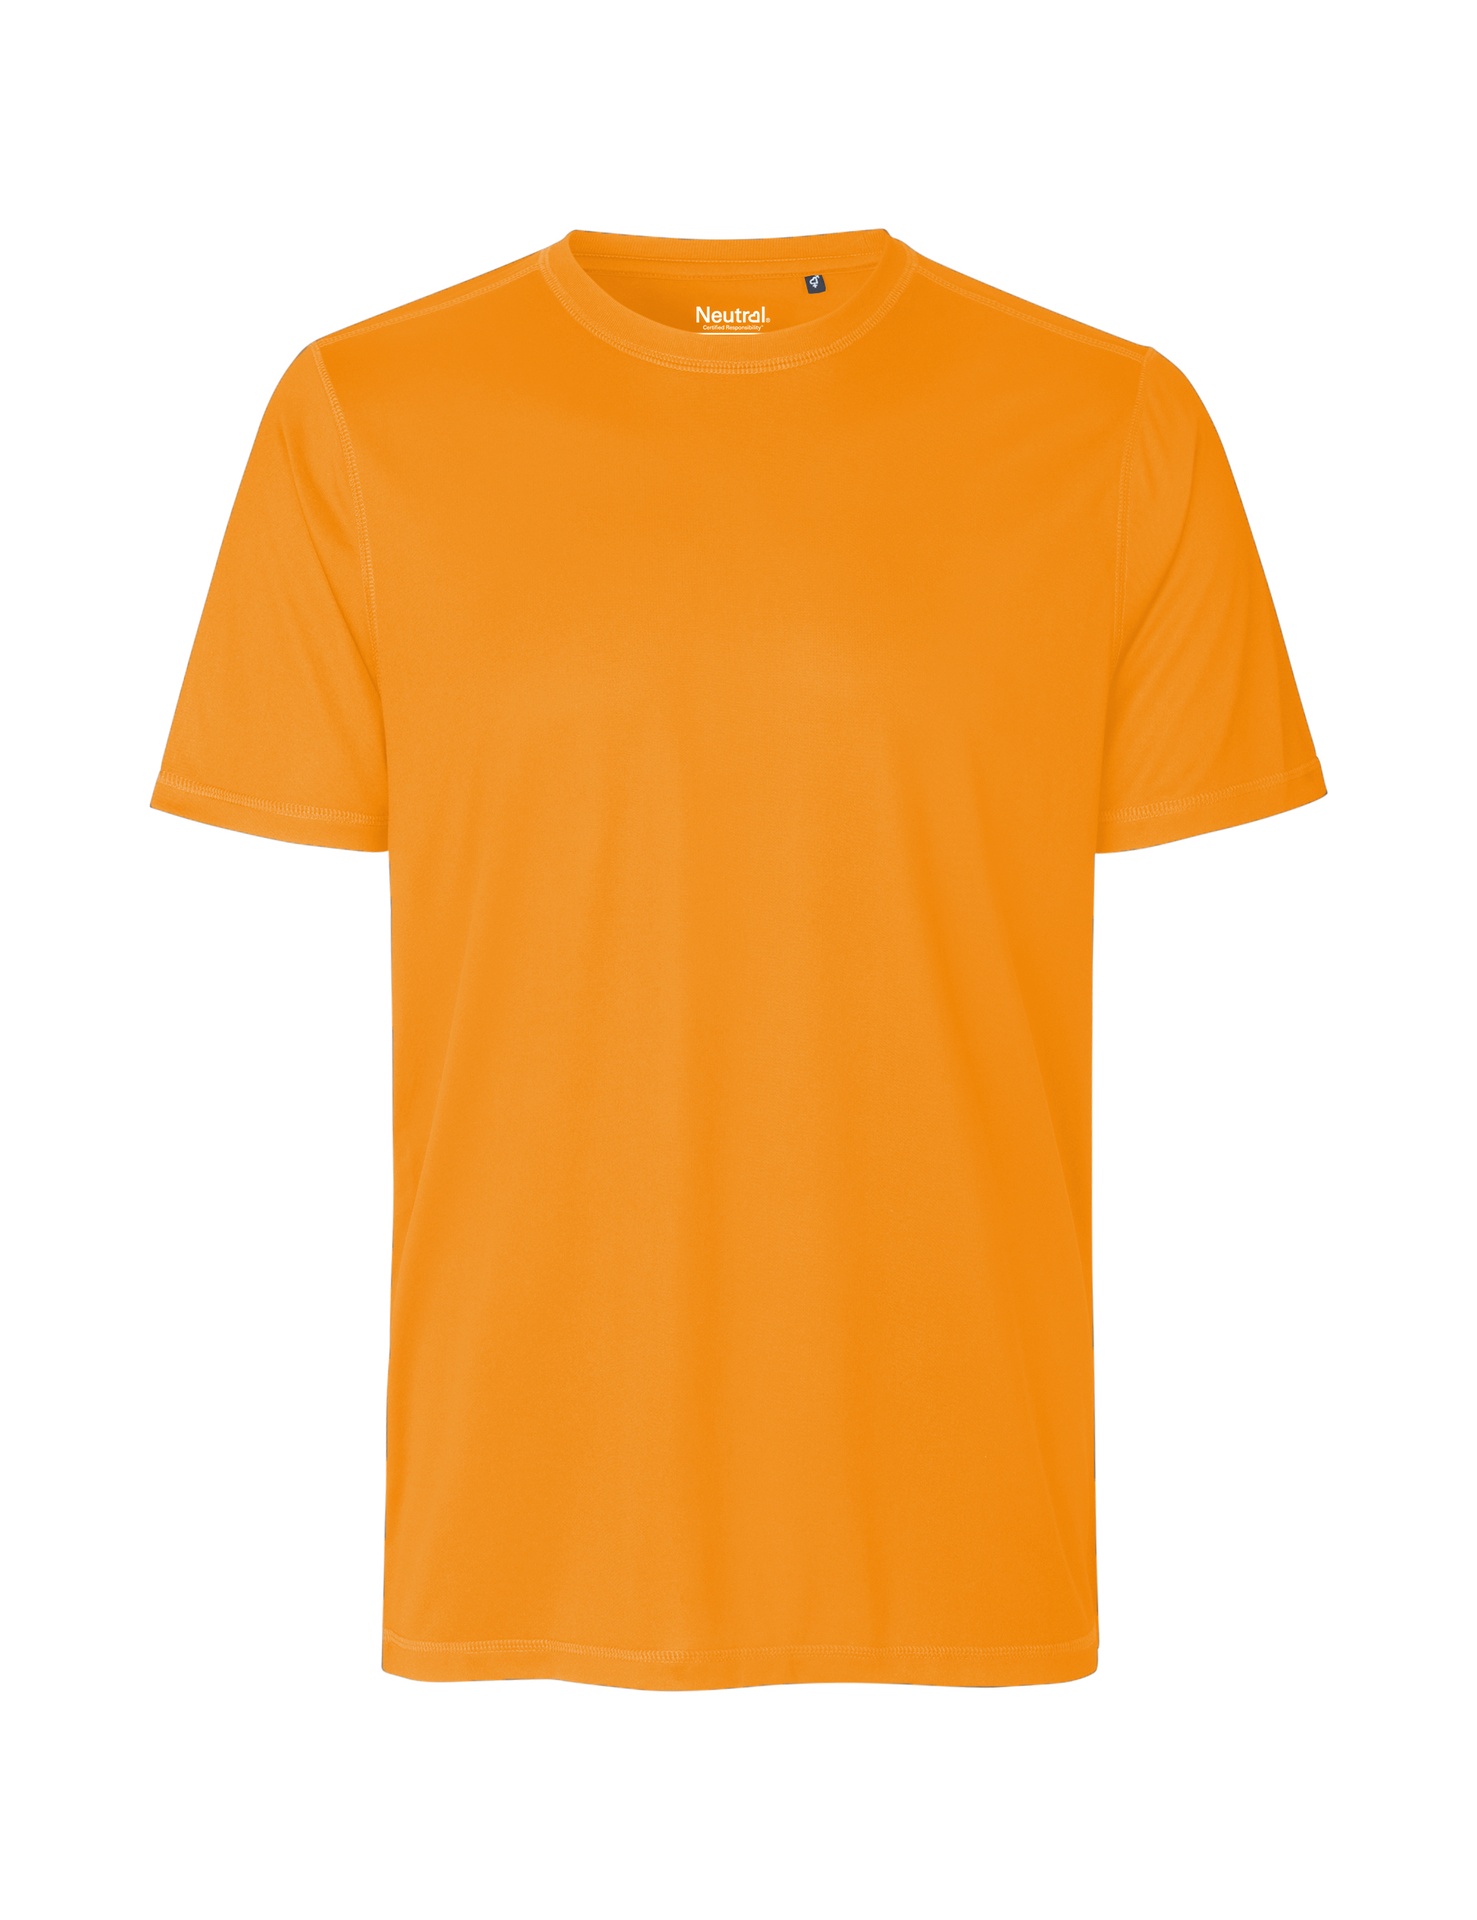 [PR/03793] Recycled Performance T-Shirt (Okay Orange 31, XL)